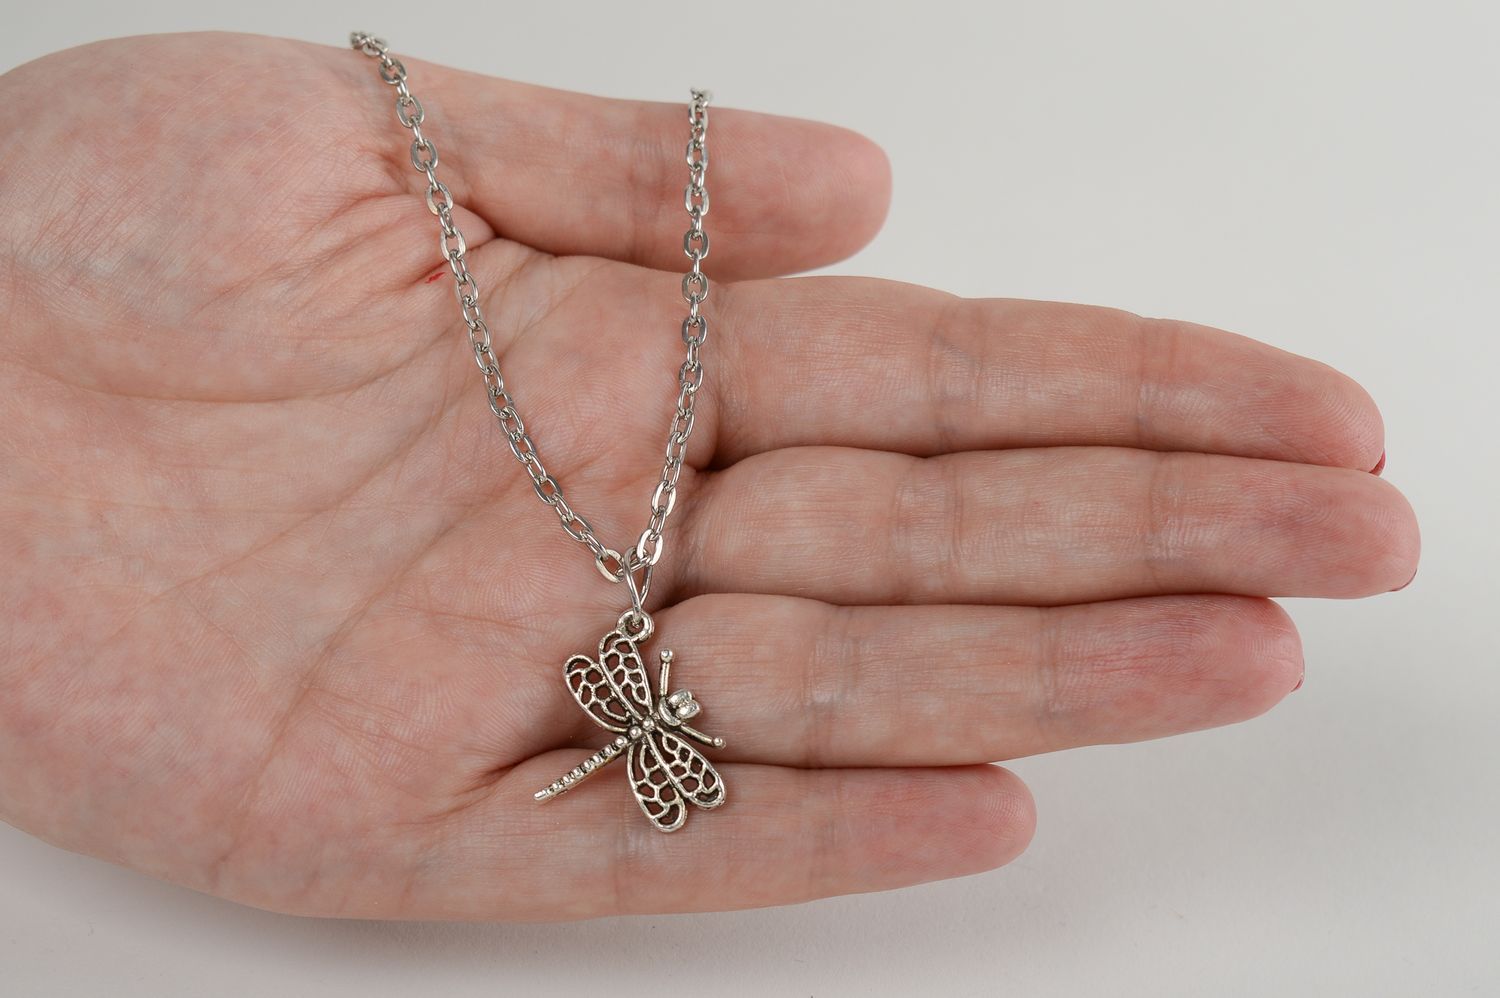 Handmade vintage pendant of chain metal pendant designer accessories for women photo 5